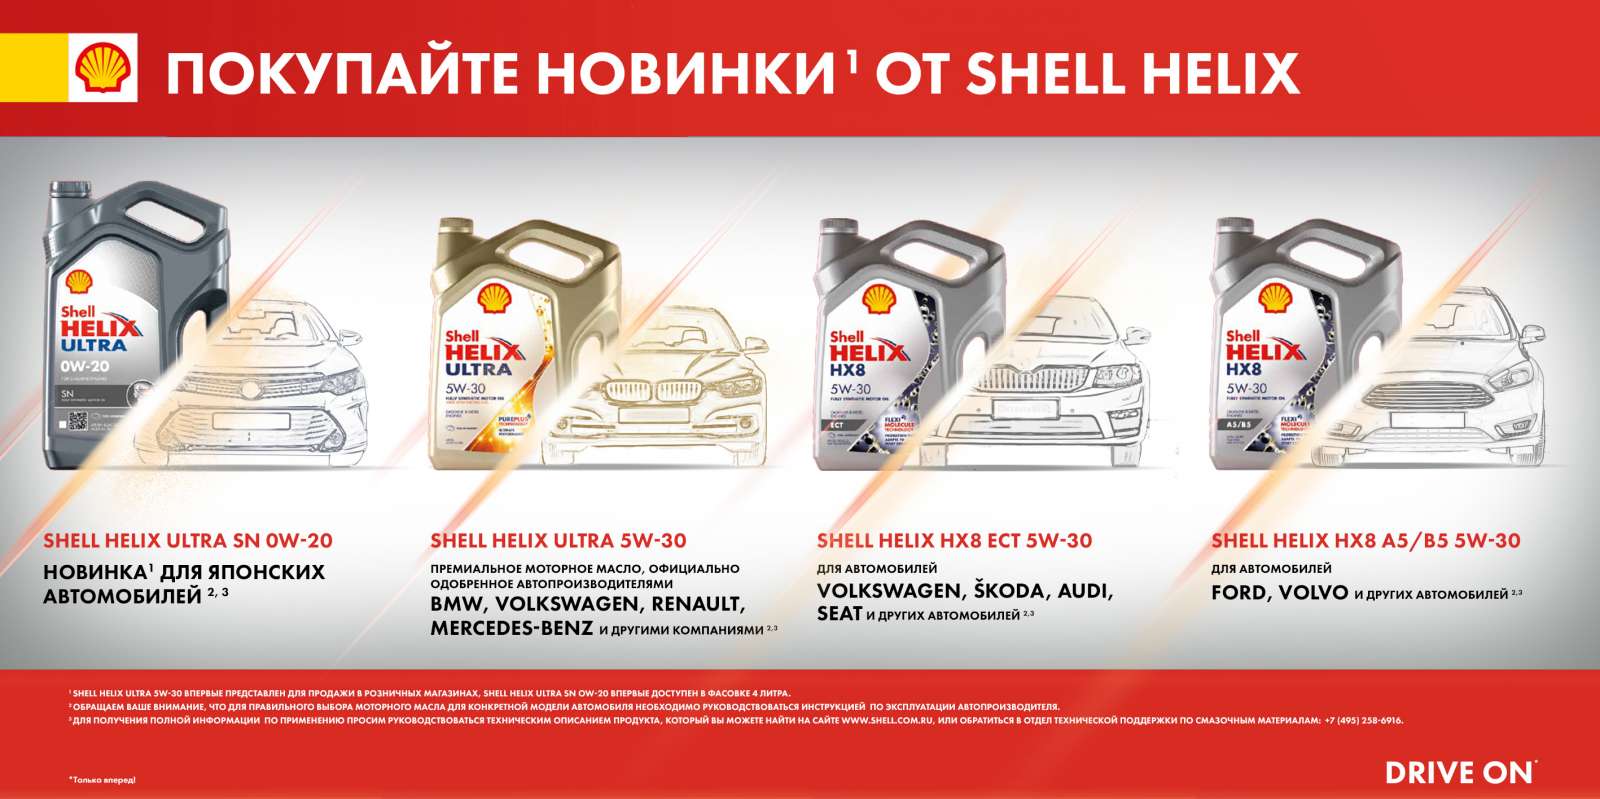 Новинки Shell Helix 2018.jpg